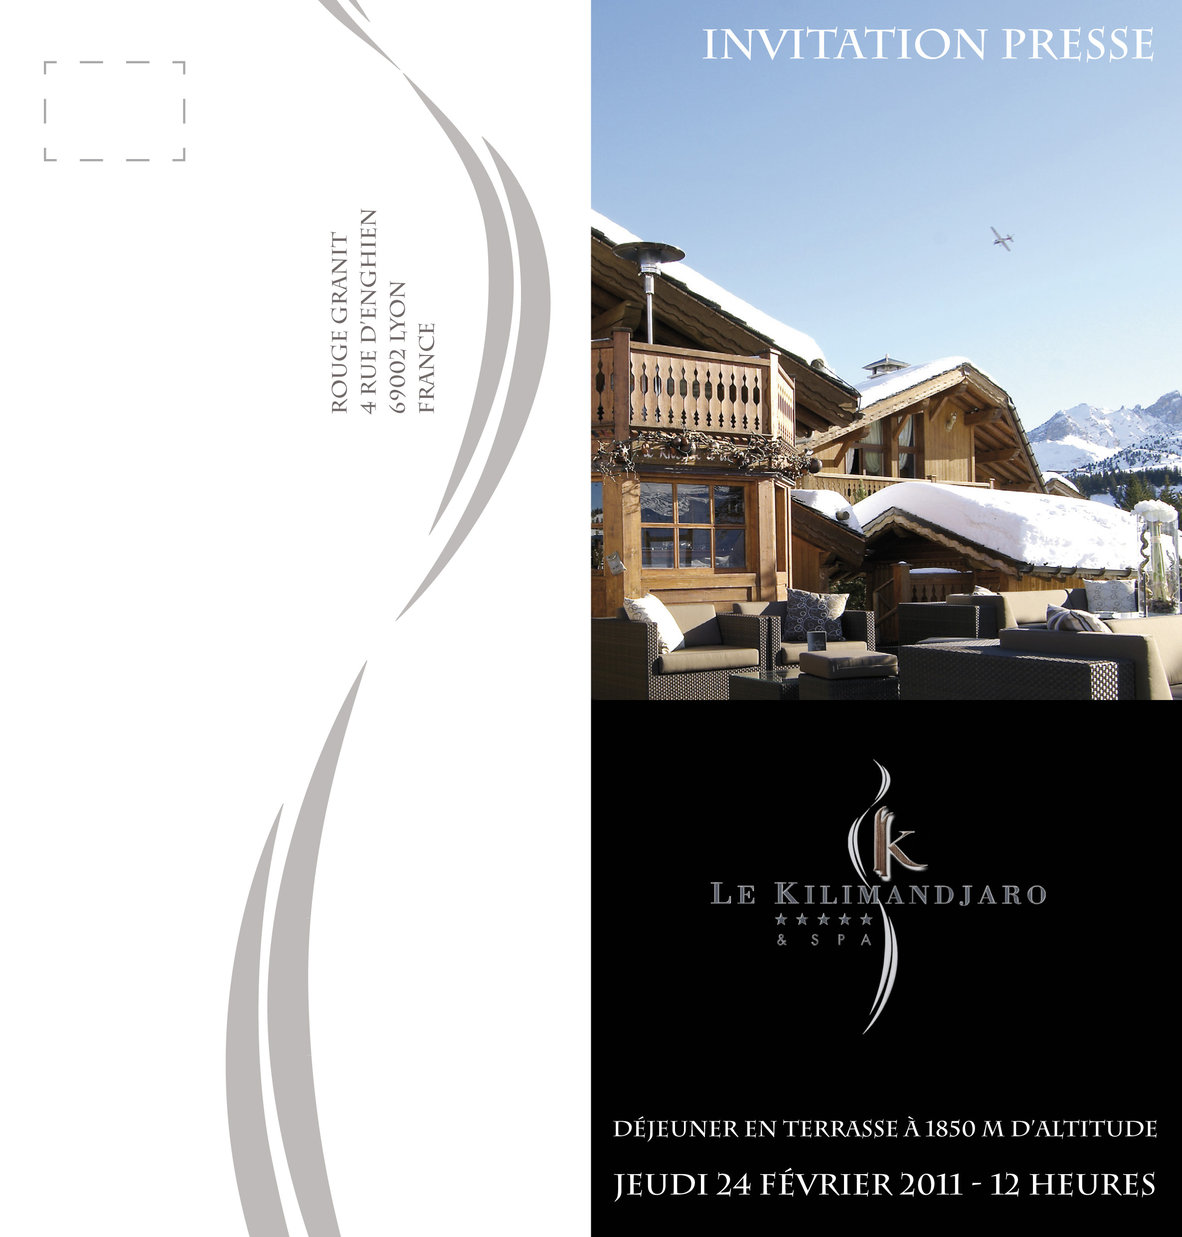 Invitation pour l'hôtel Le Kilimandjaro 2